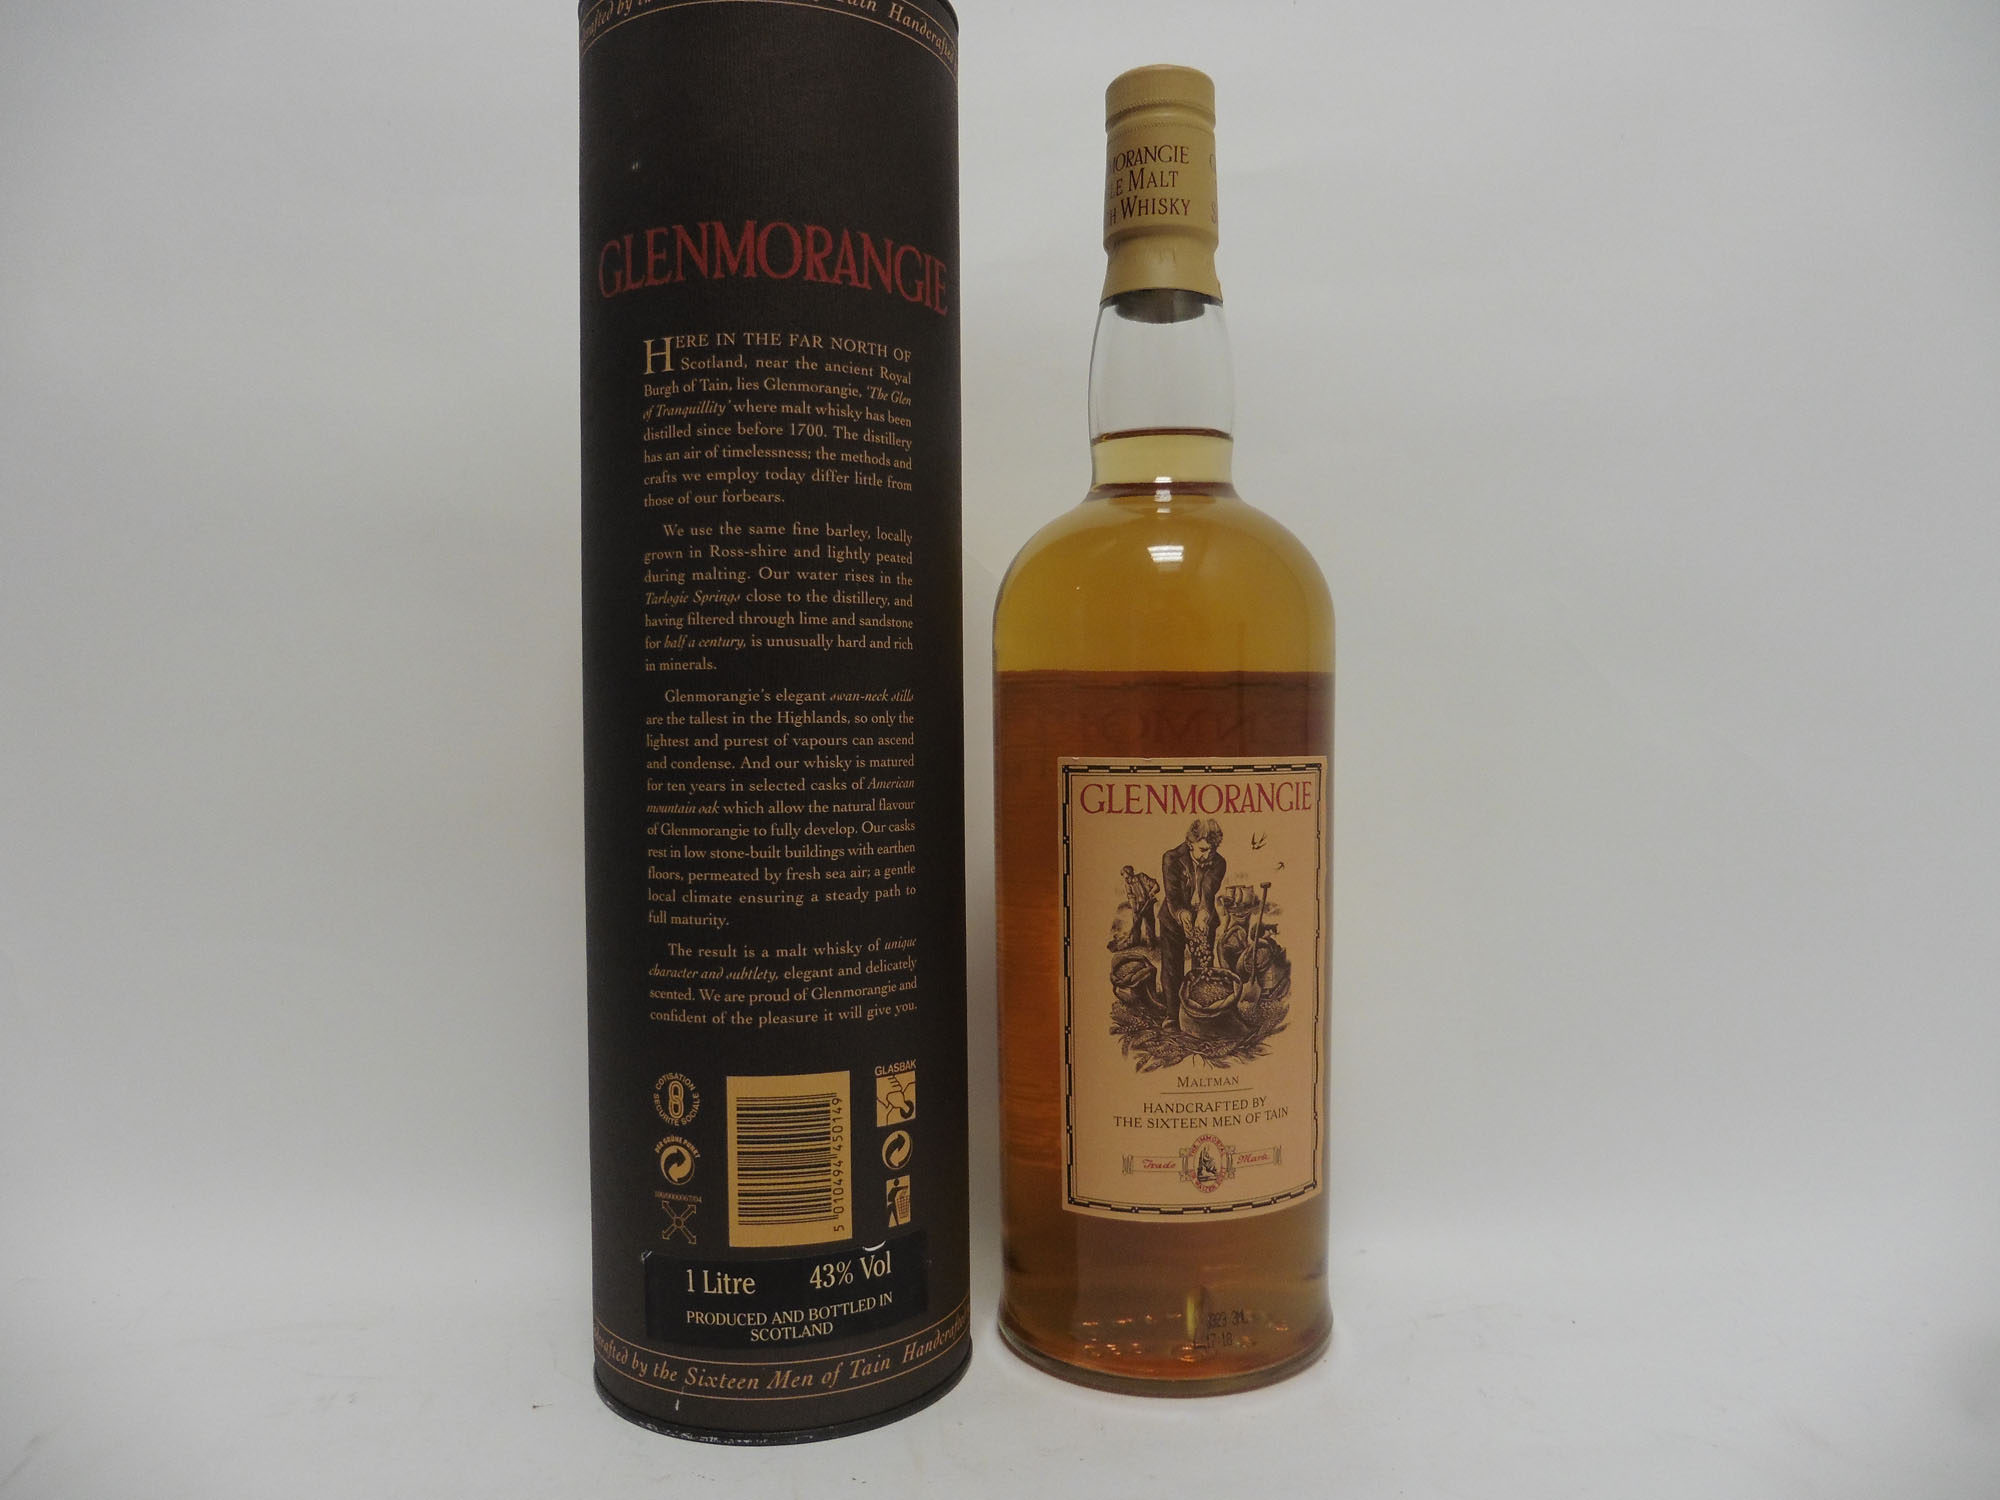 A bottle of Glenmorangie 10 year old Single Highland Malt Scotch Whisky with carton old style - Image 2 of 2